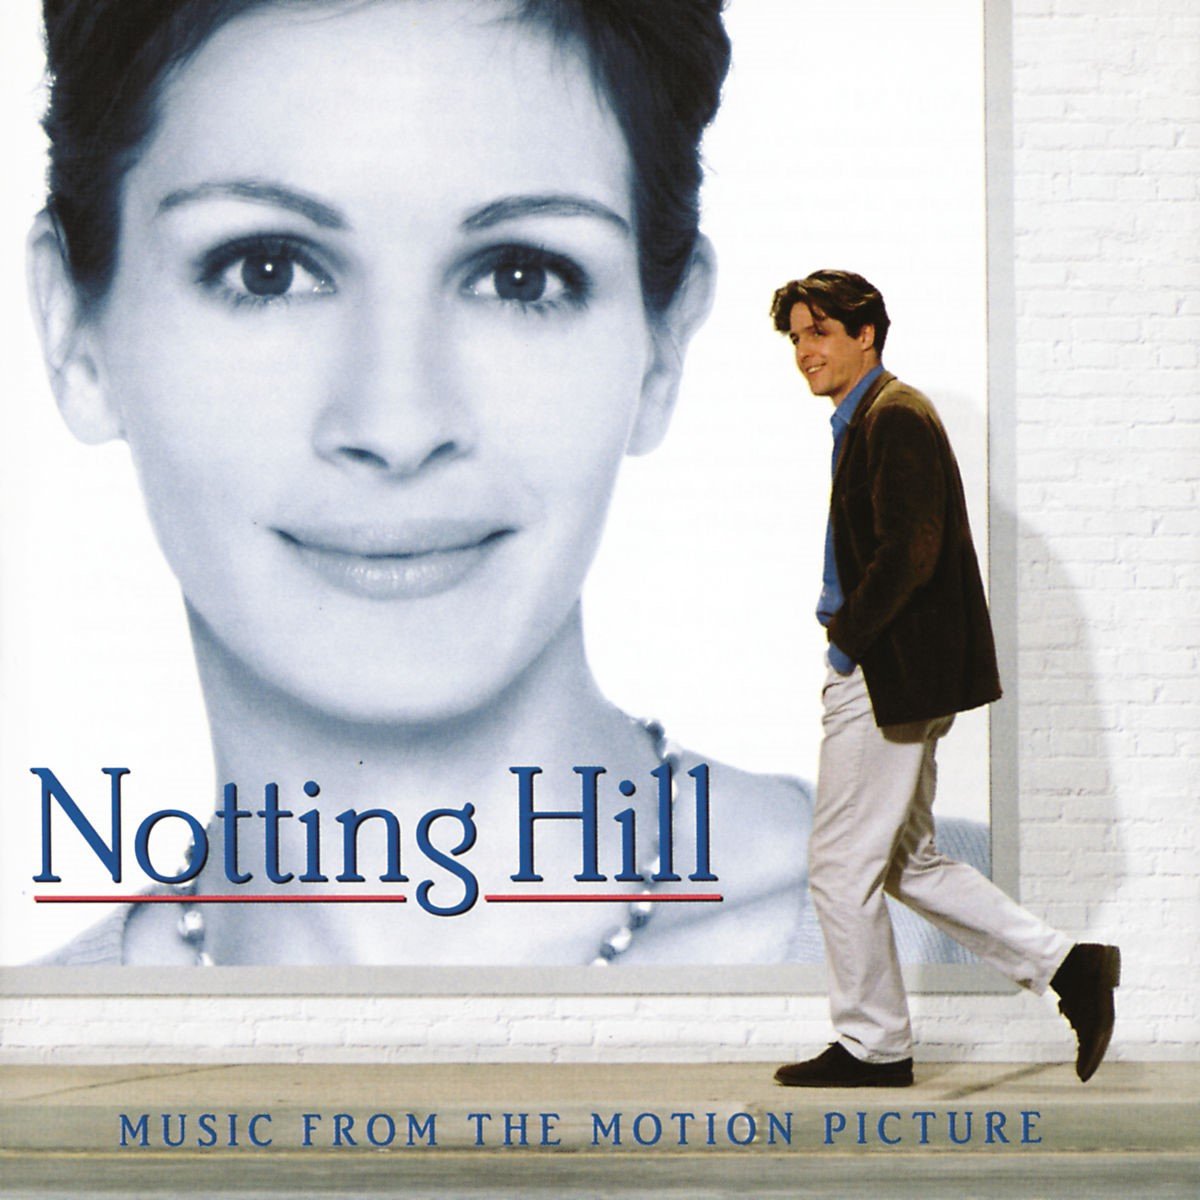 Various Artists - Notting Hill (CD) (Original Soundtrack) - various artists